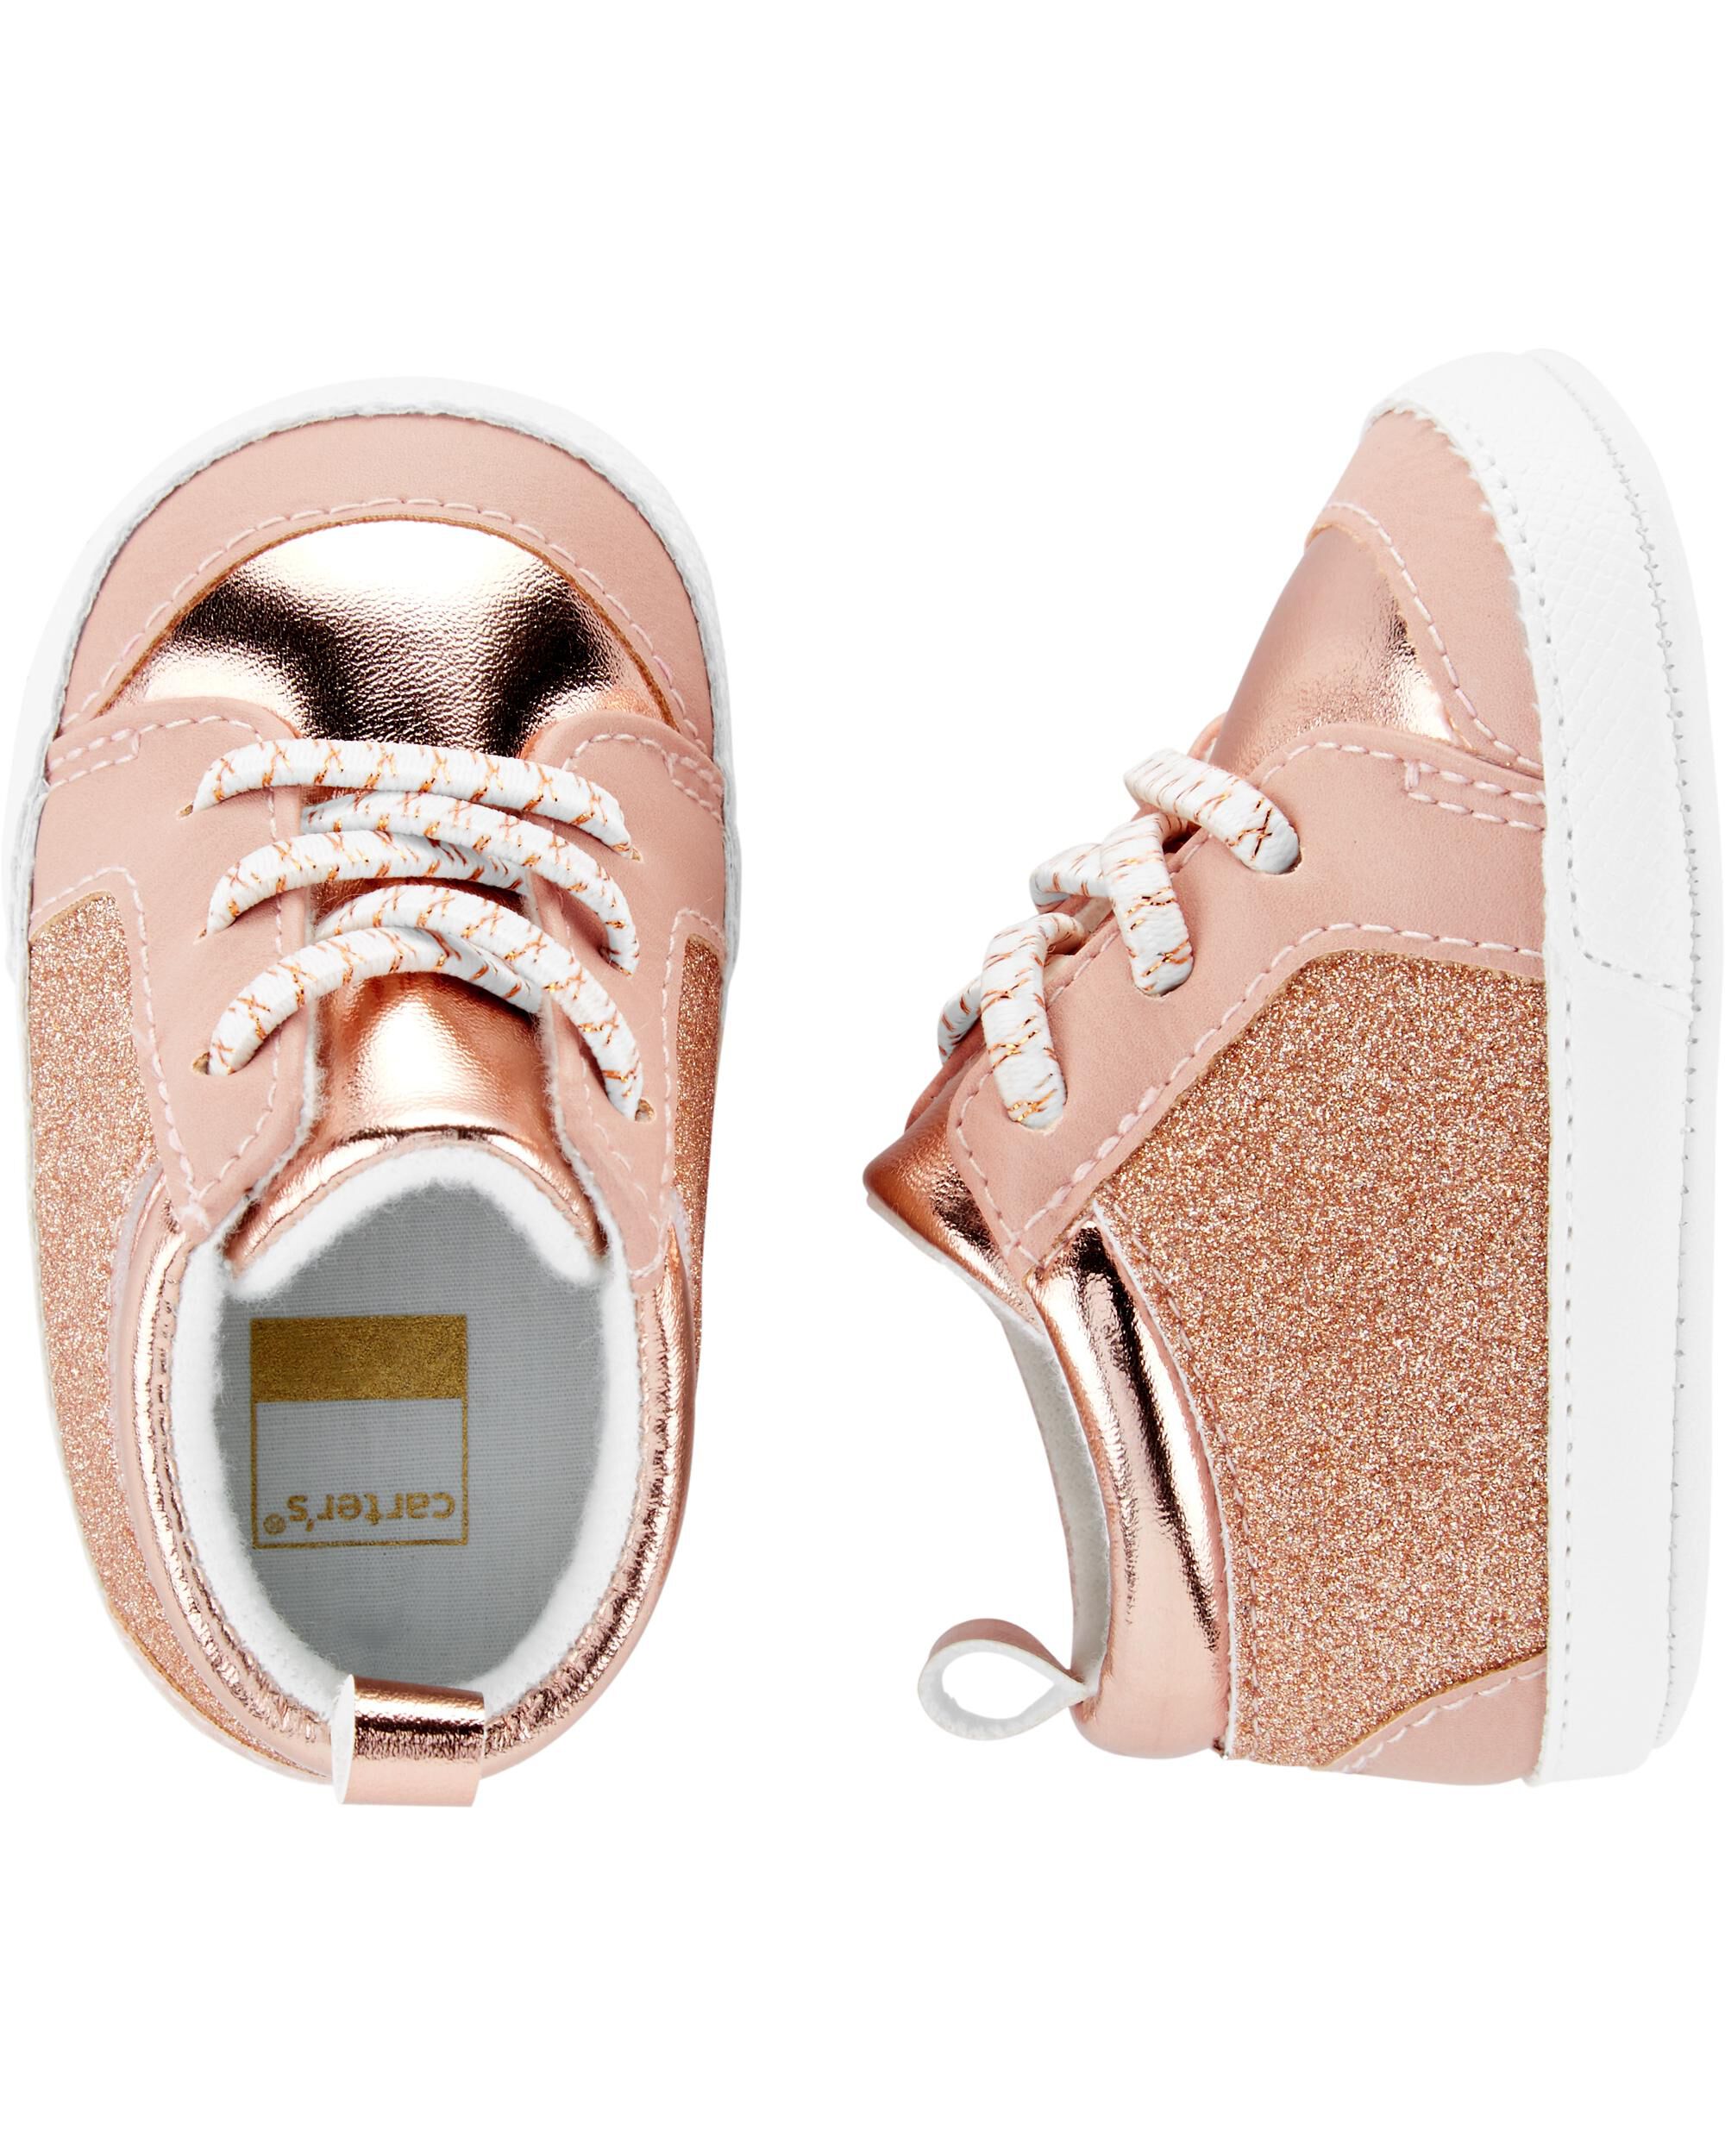 Glitter Sneaker Baby Shoes | carters 